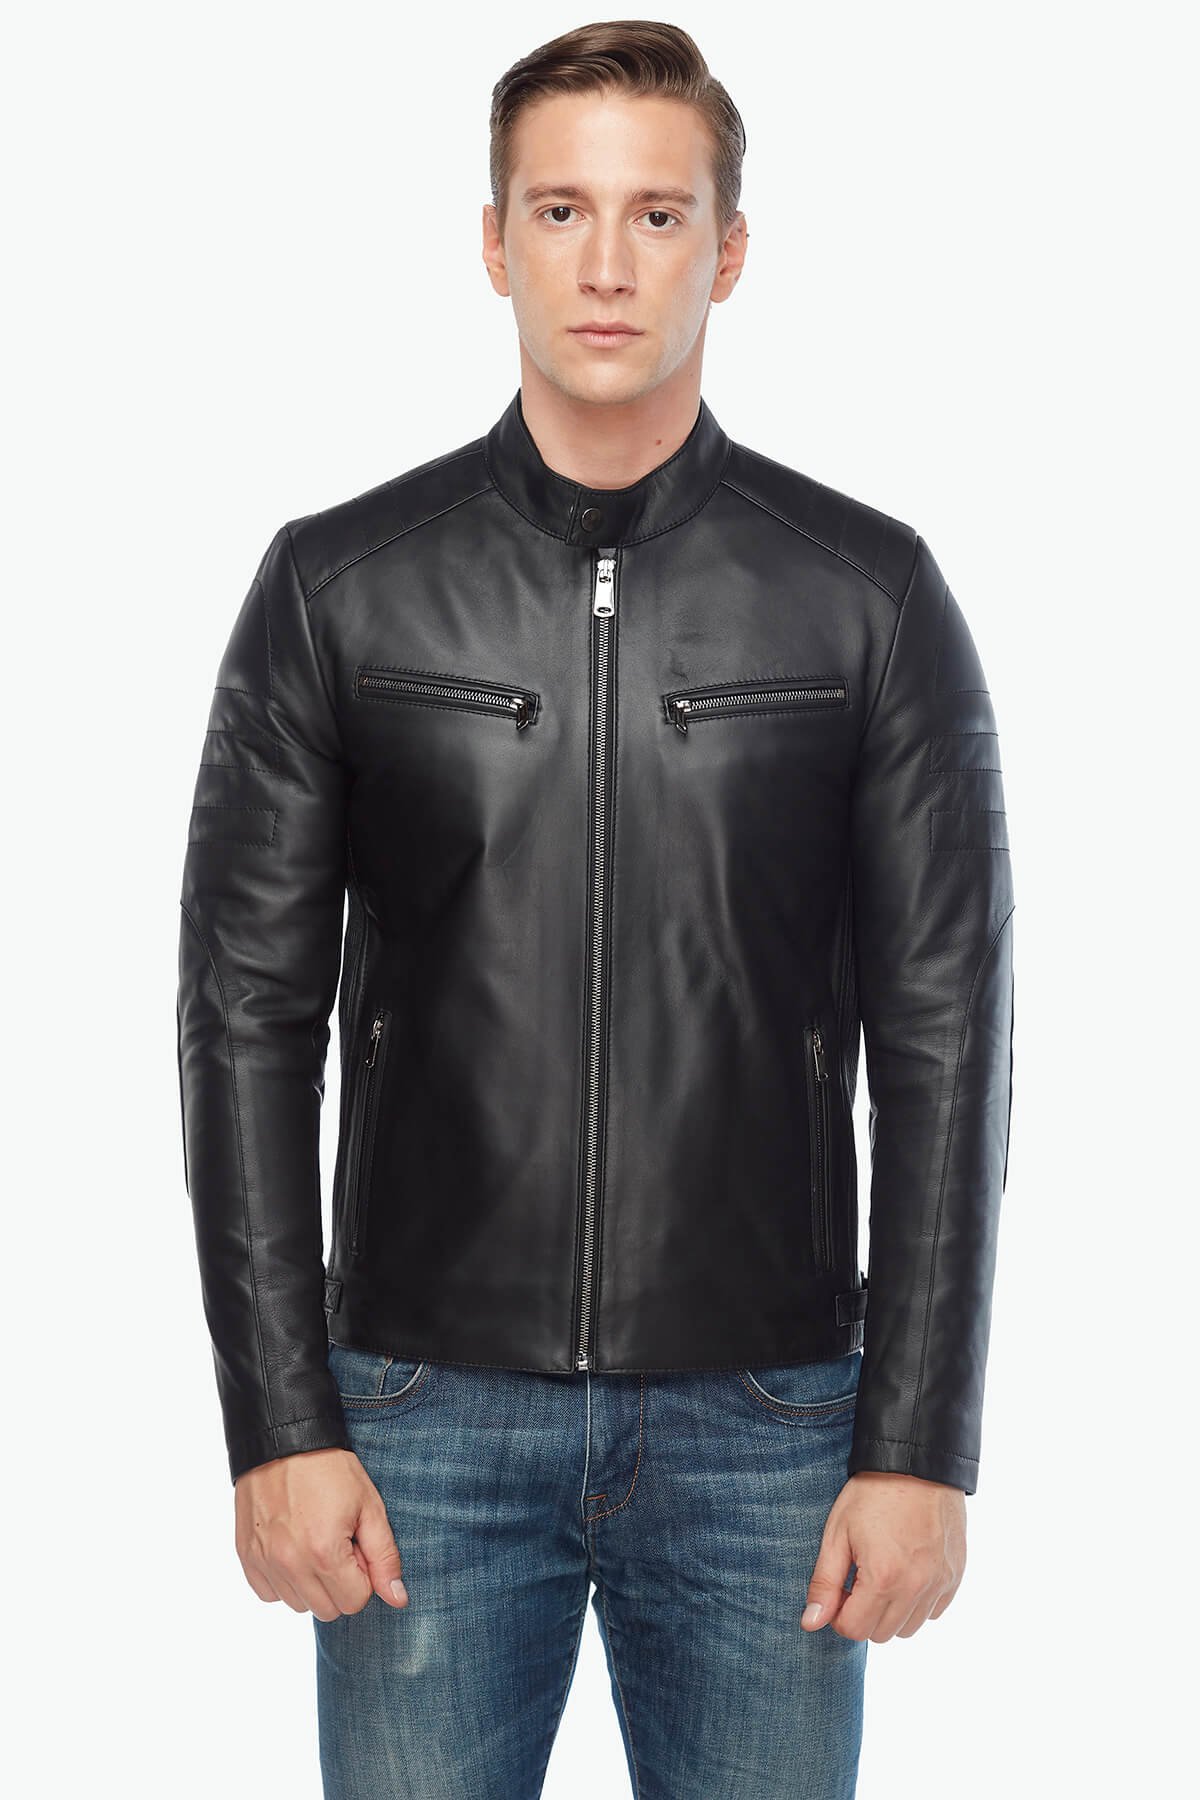 Brando Men's Sport Leather Jacket Black